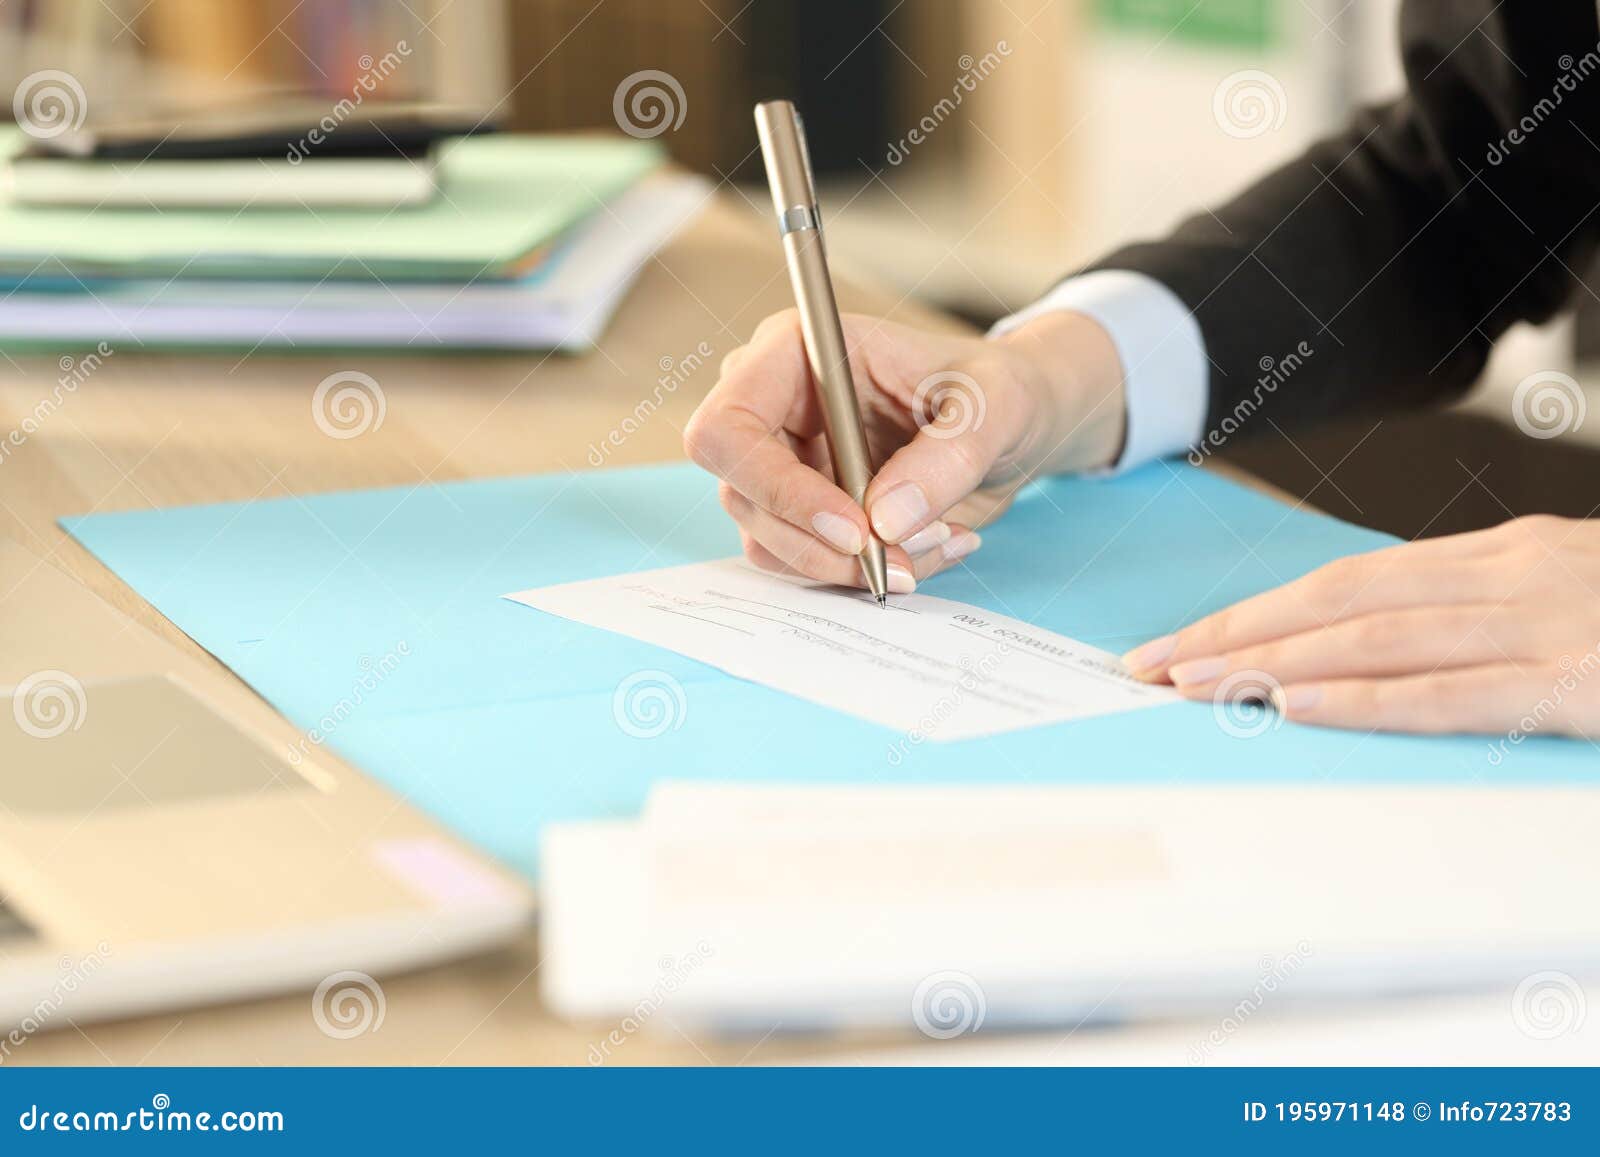 self employed hands signing bank check at homeoffice